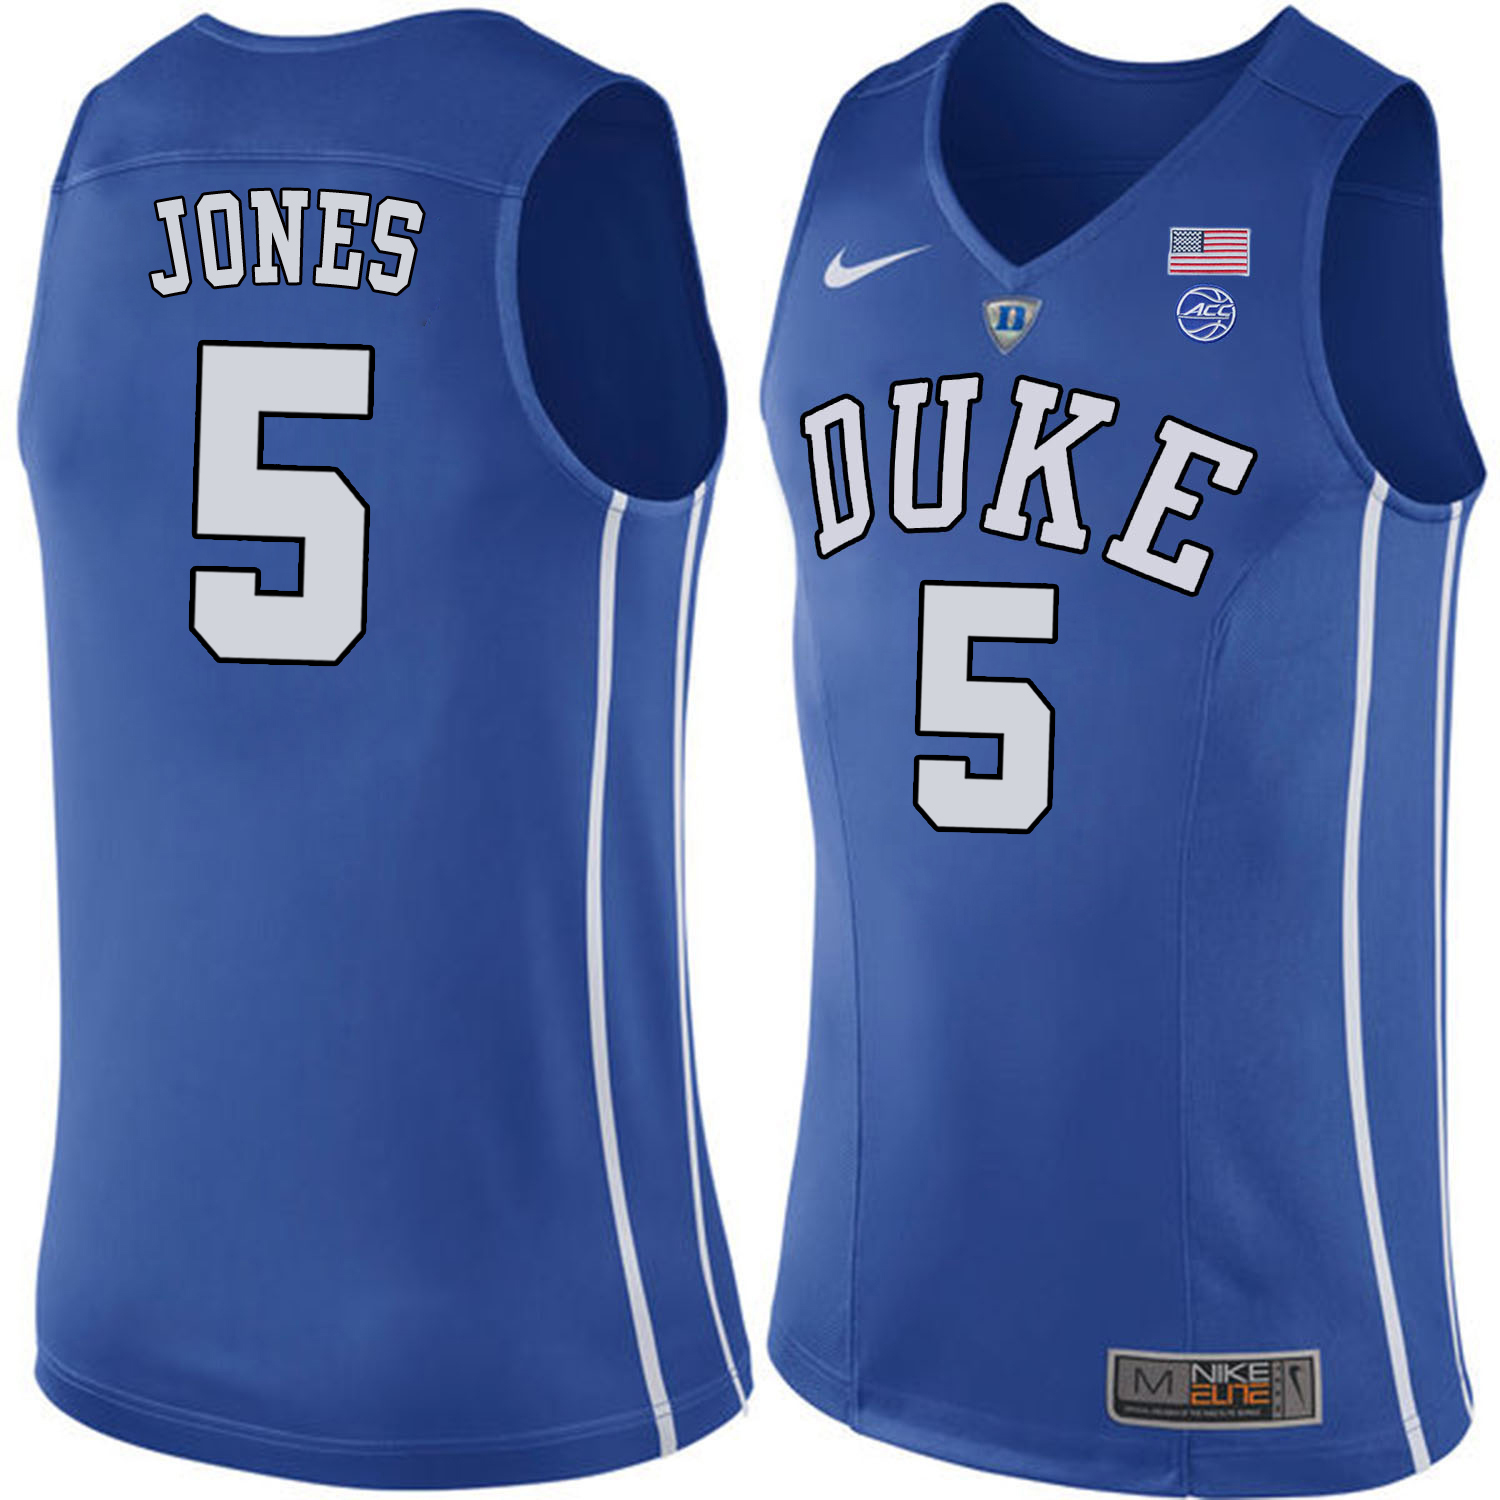 Duke Blue Devils 5 Tyus Jones Blue College Basketball Jersey